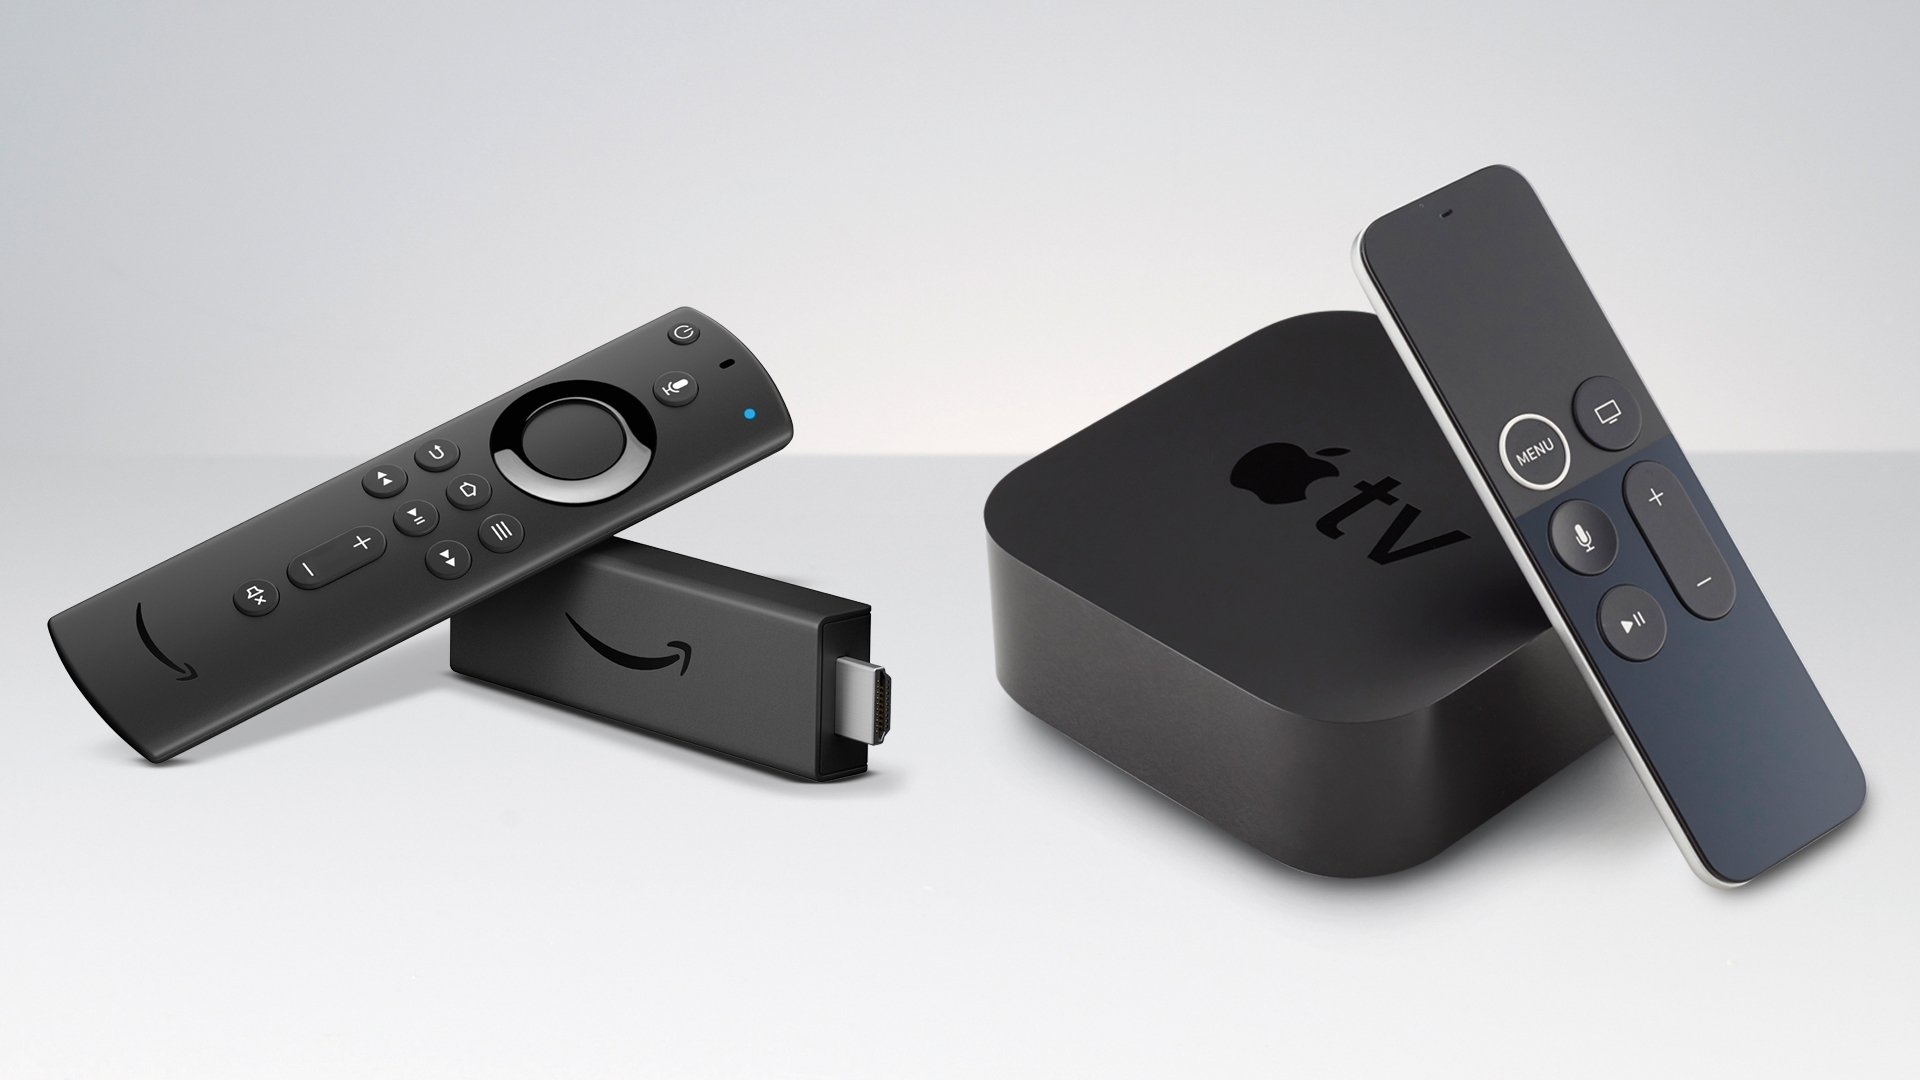 Amazon Fire TV Stick 4K vs Apple TV 4K: which is better?